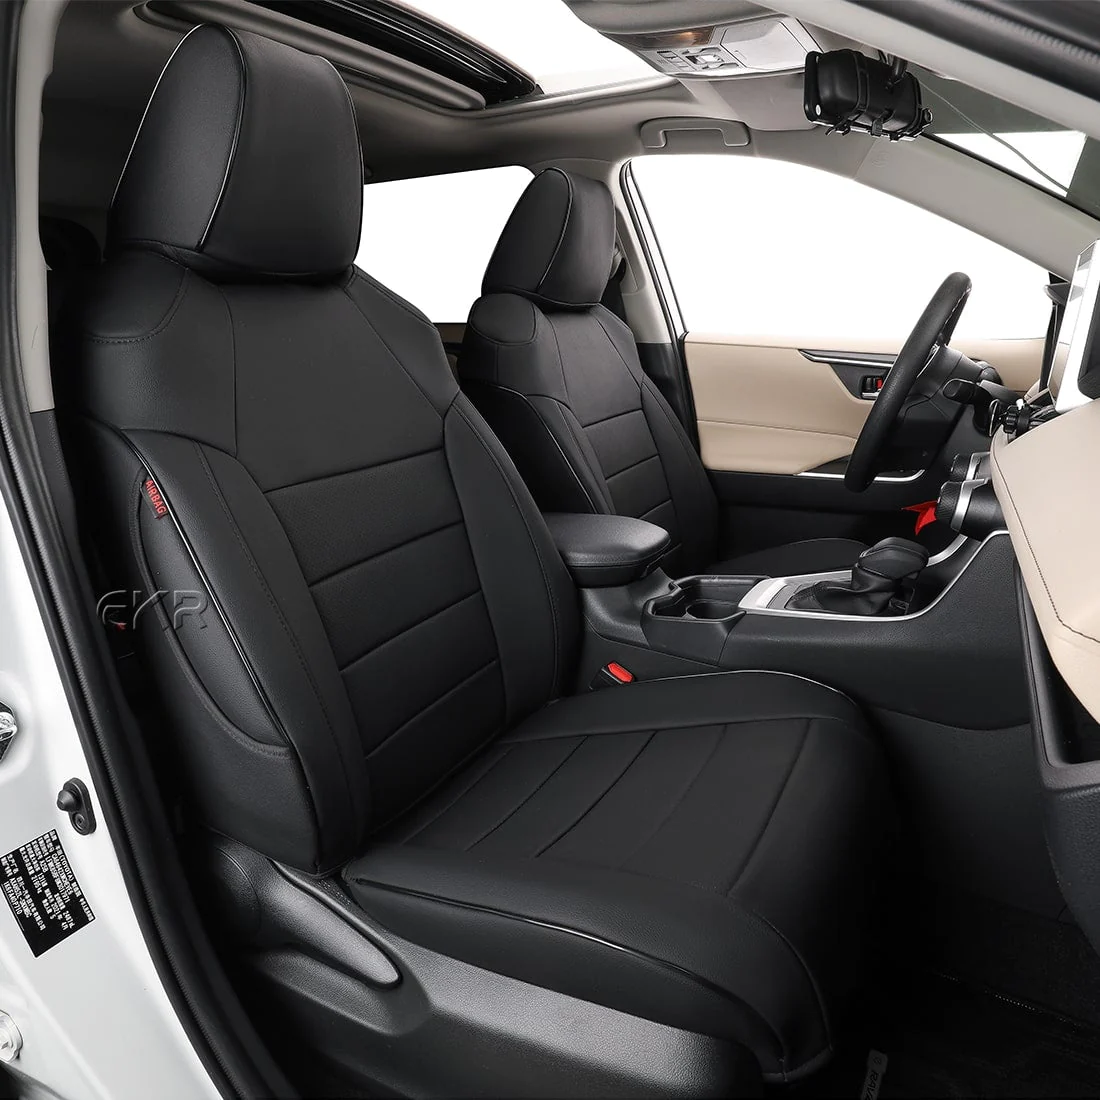 Infiniti M37 interior - Seats